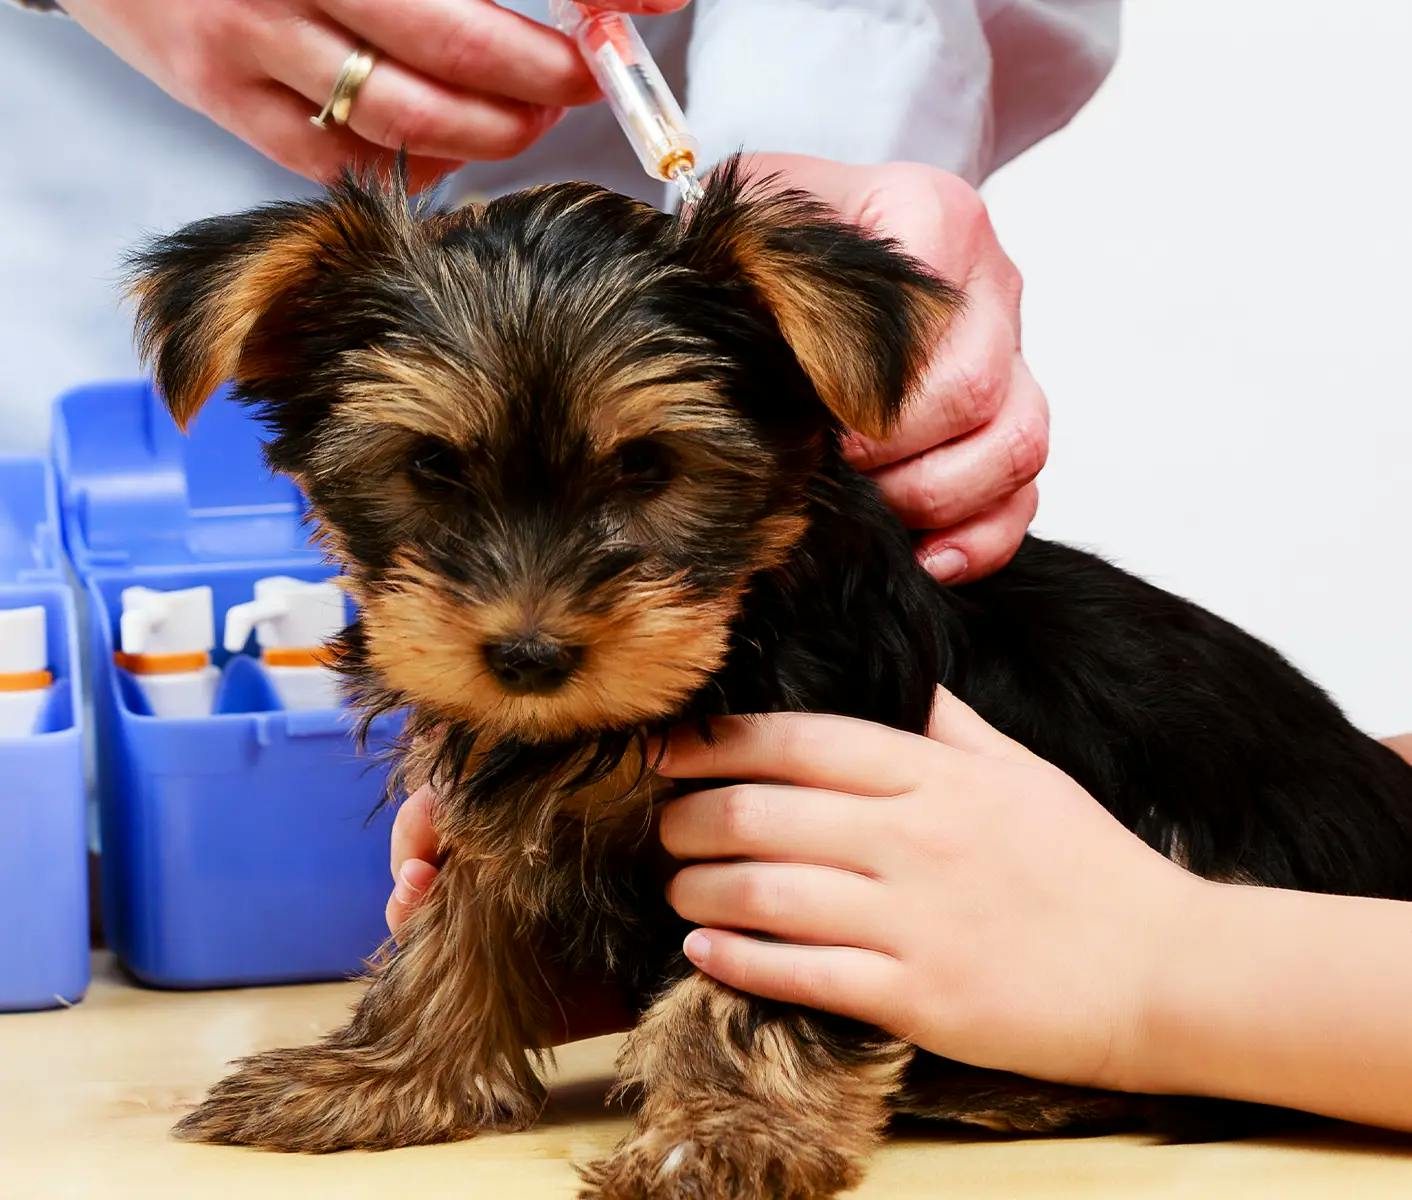 dog getting a vaccine